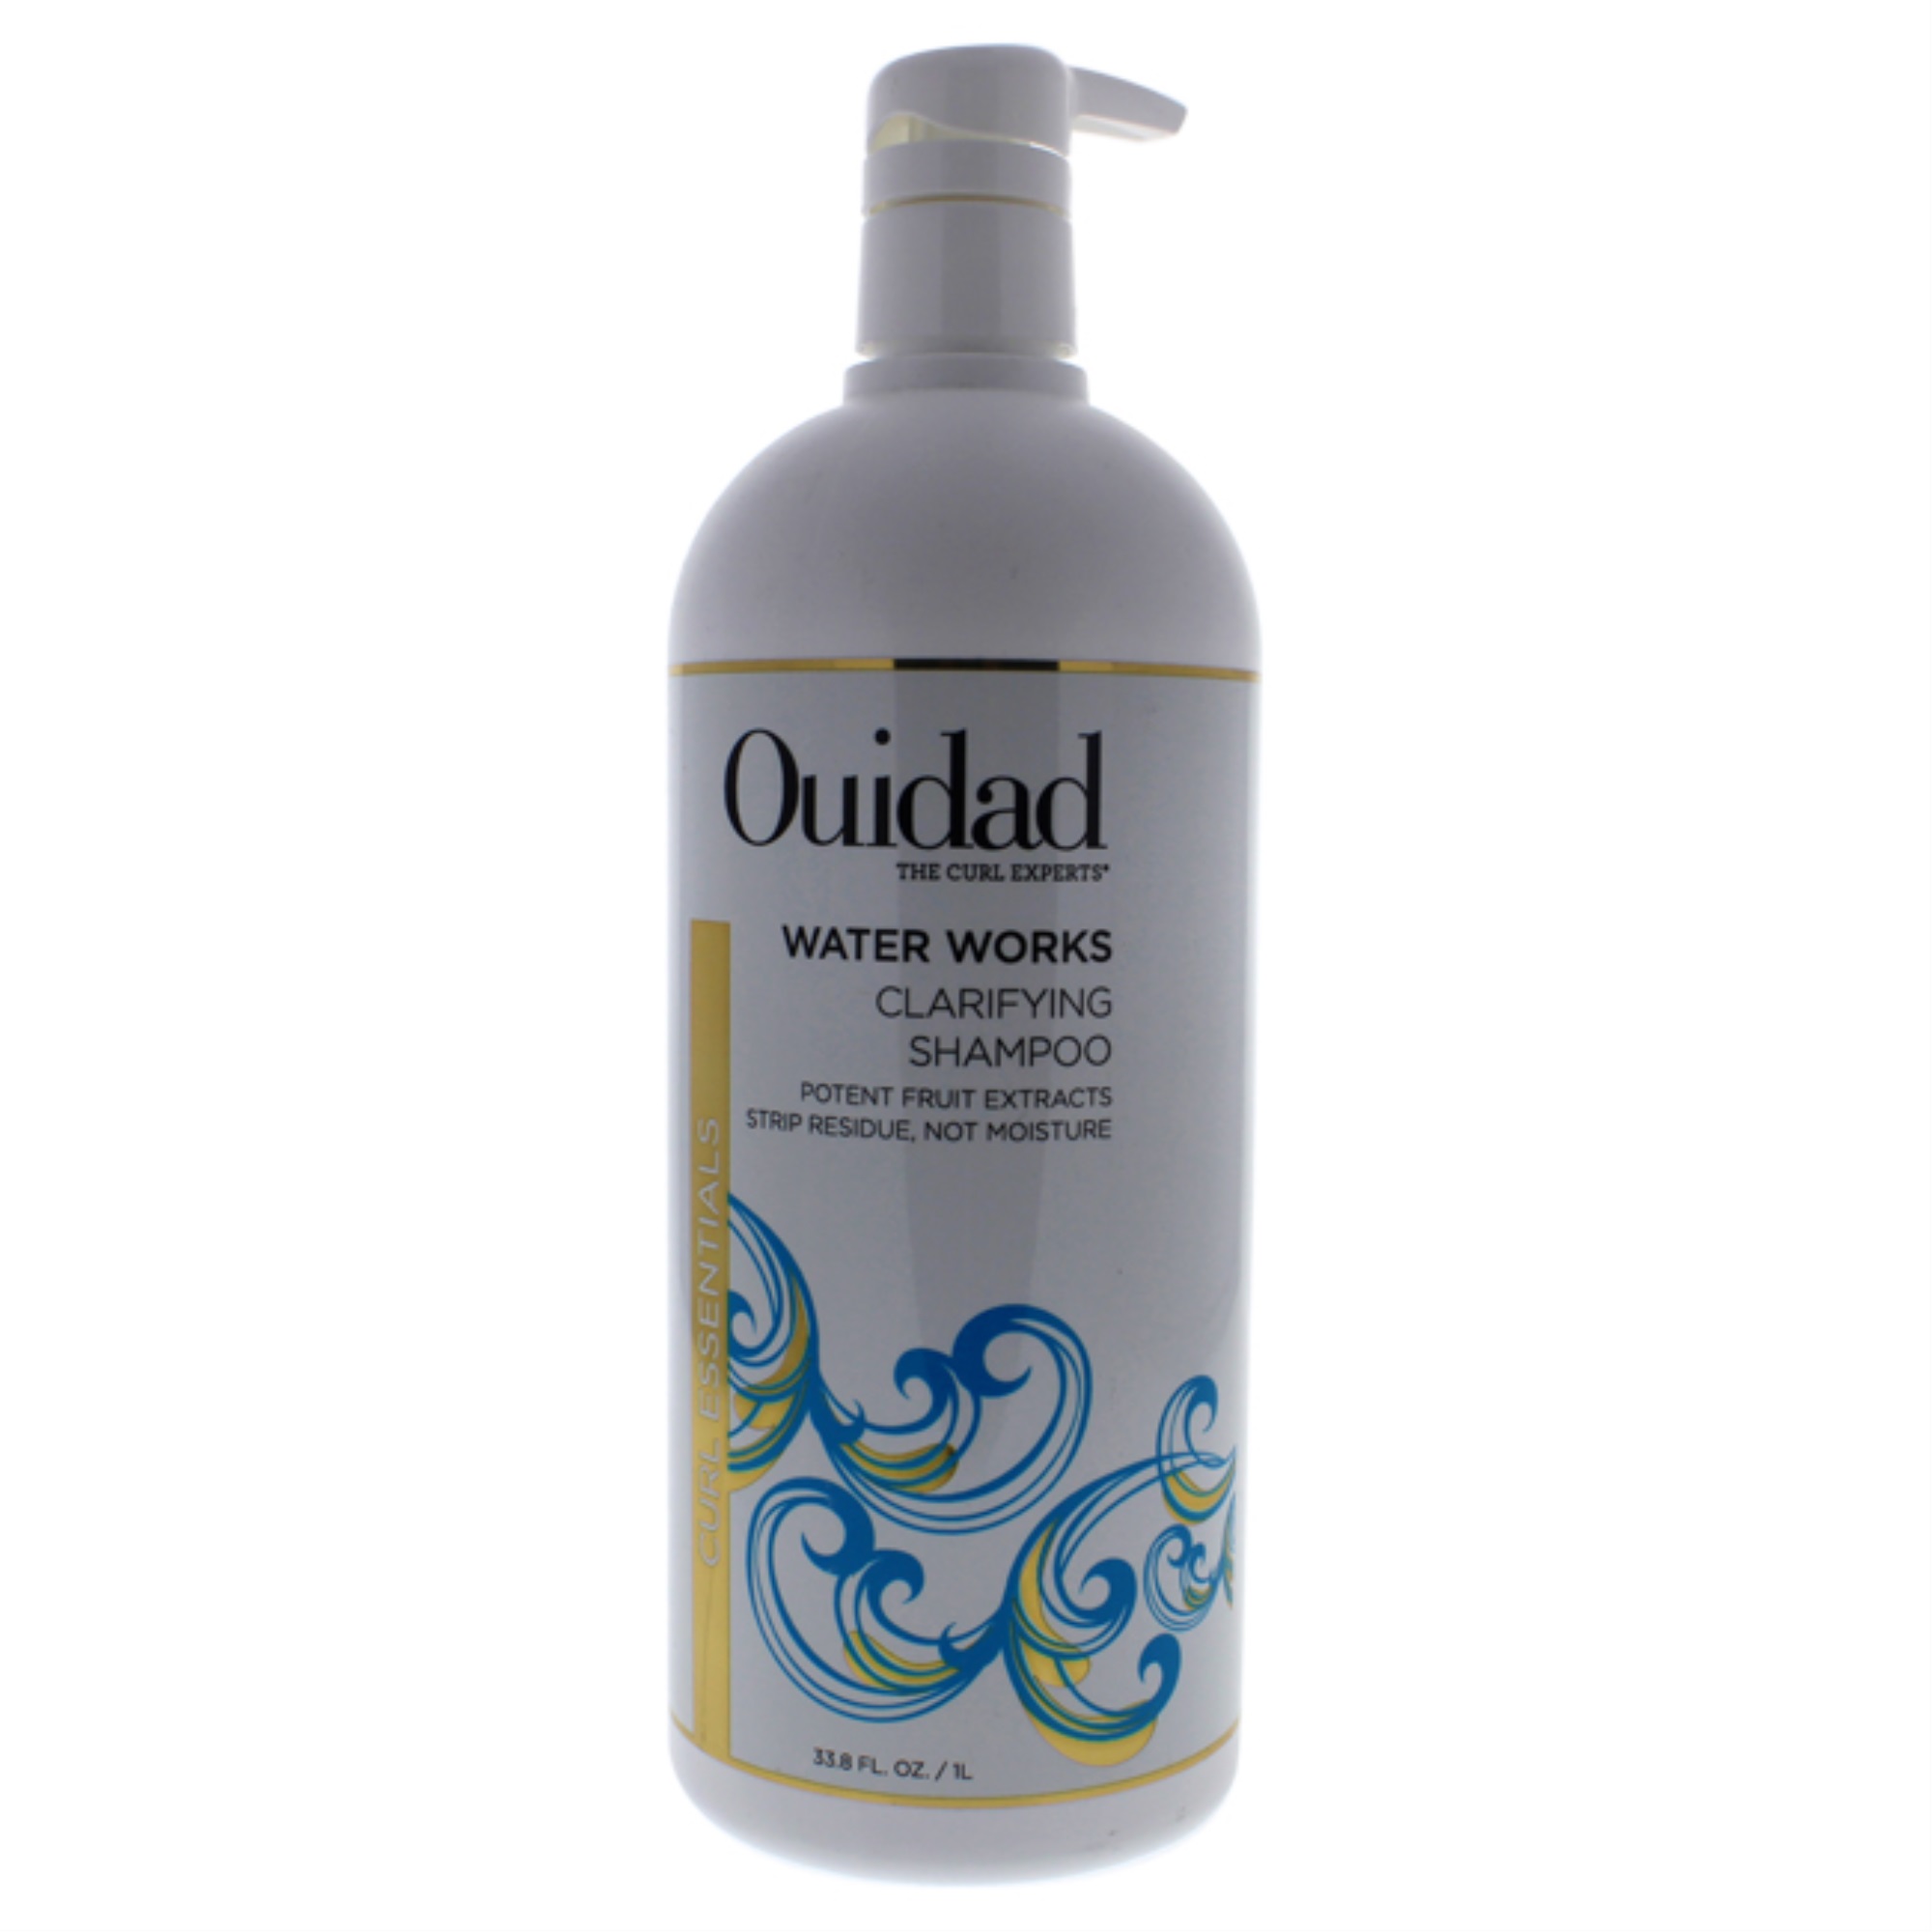 Ouidad Water Works Clarifying Shampoo 33.8oz/1 Liter